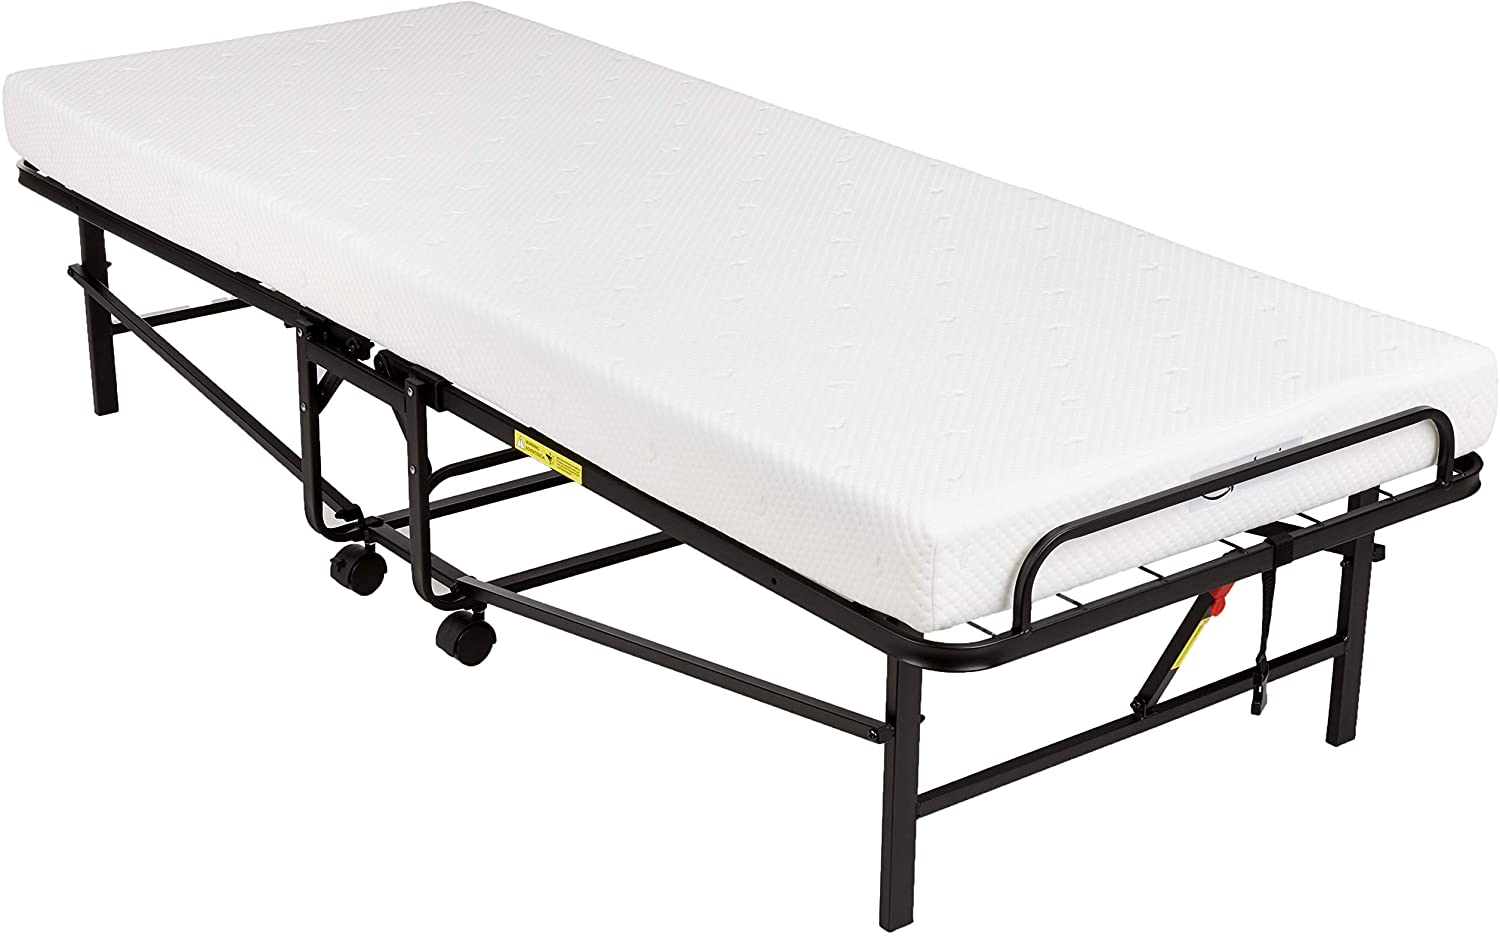 foam mattress for cot bed